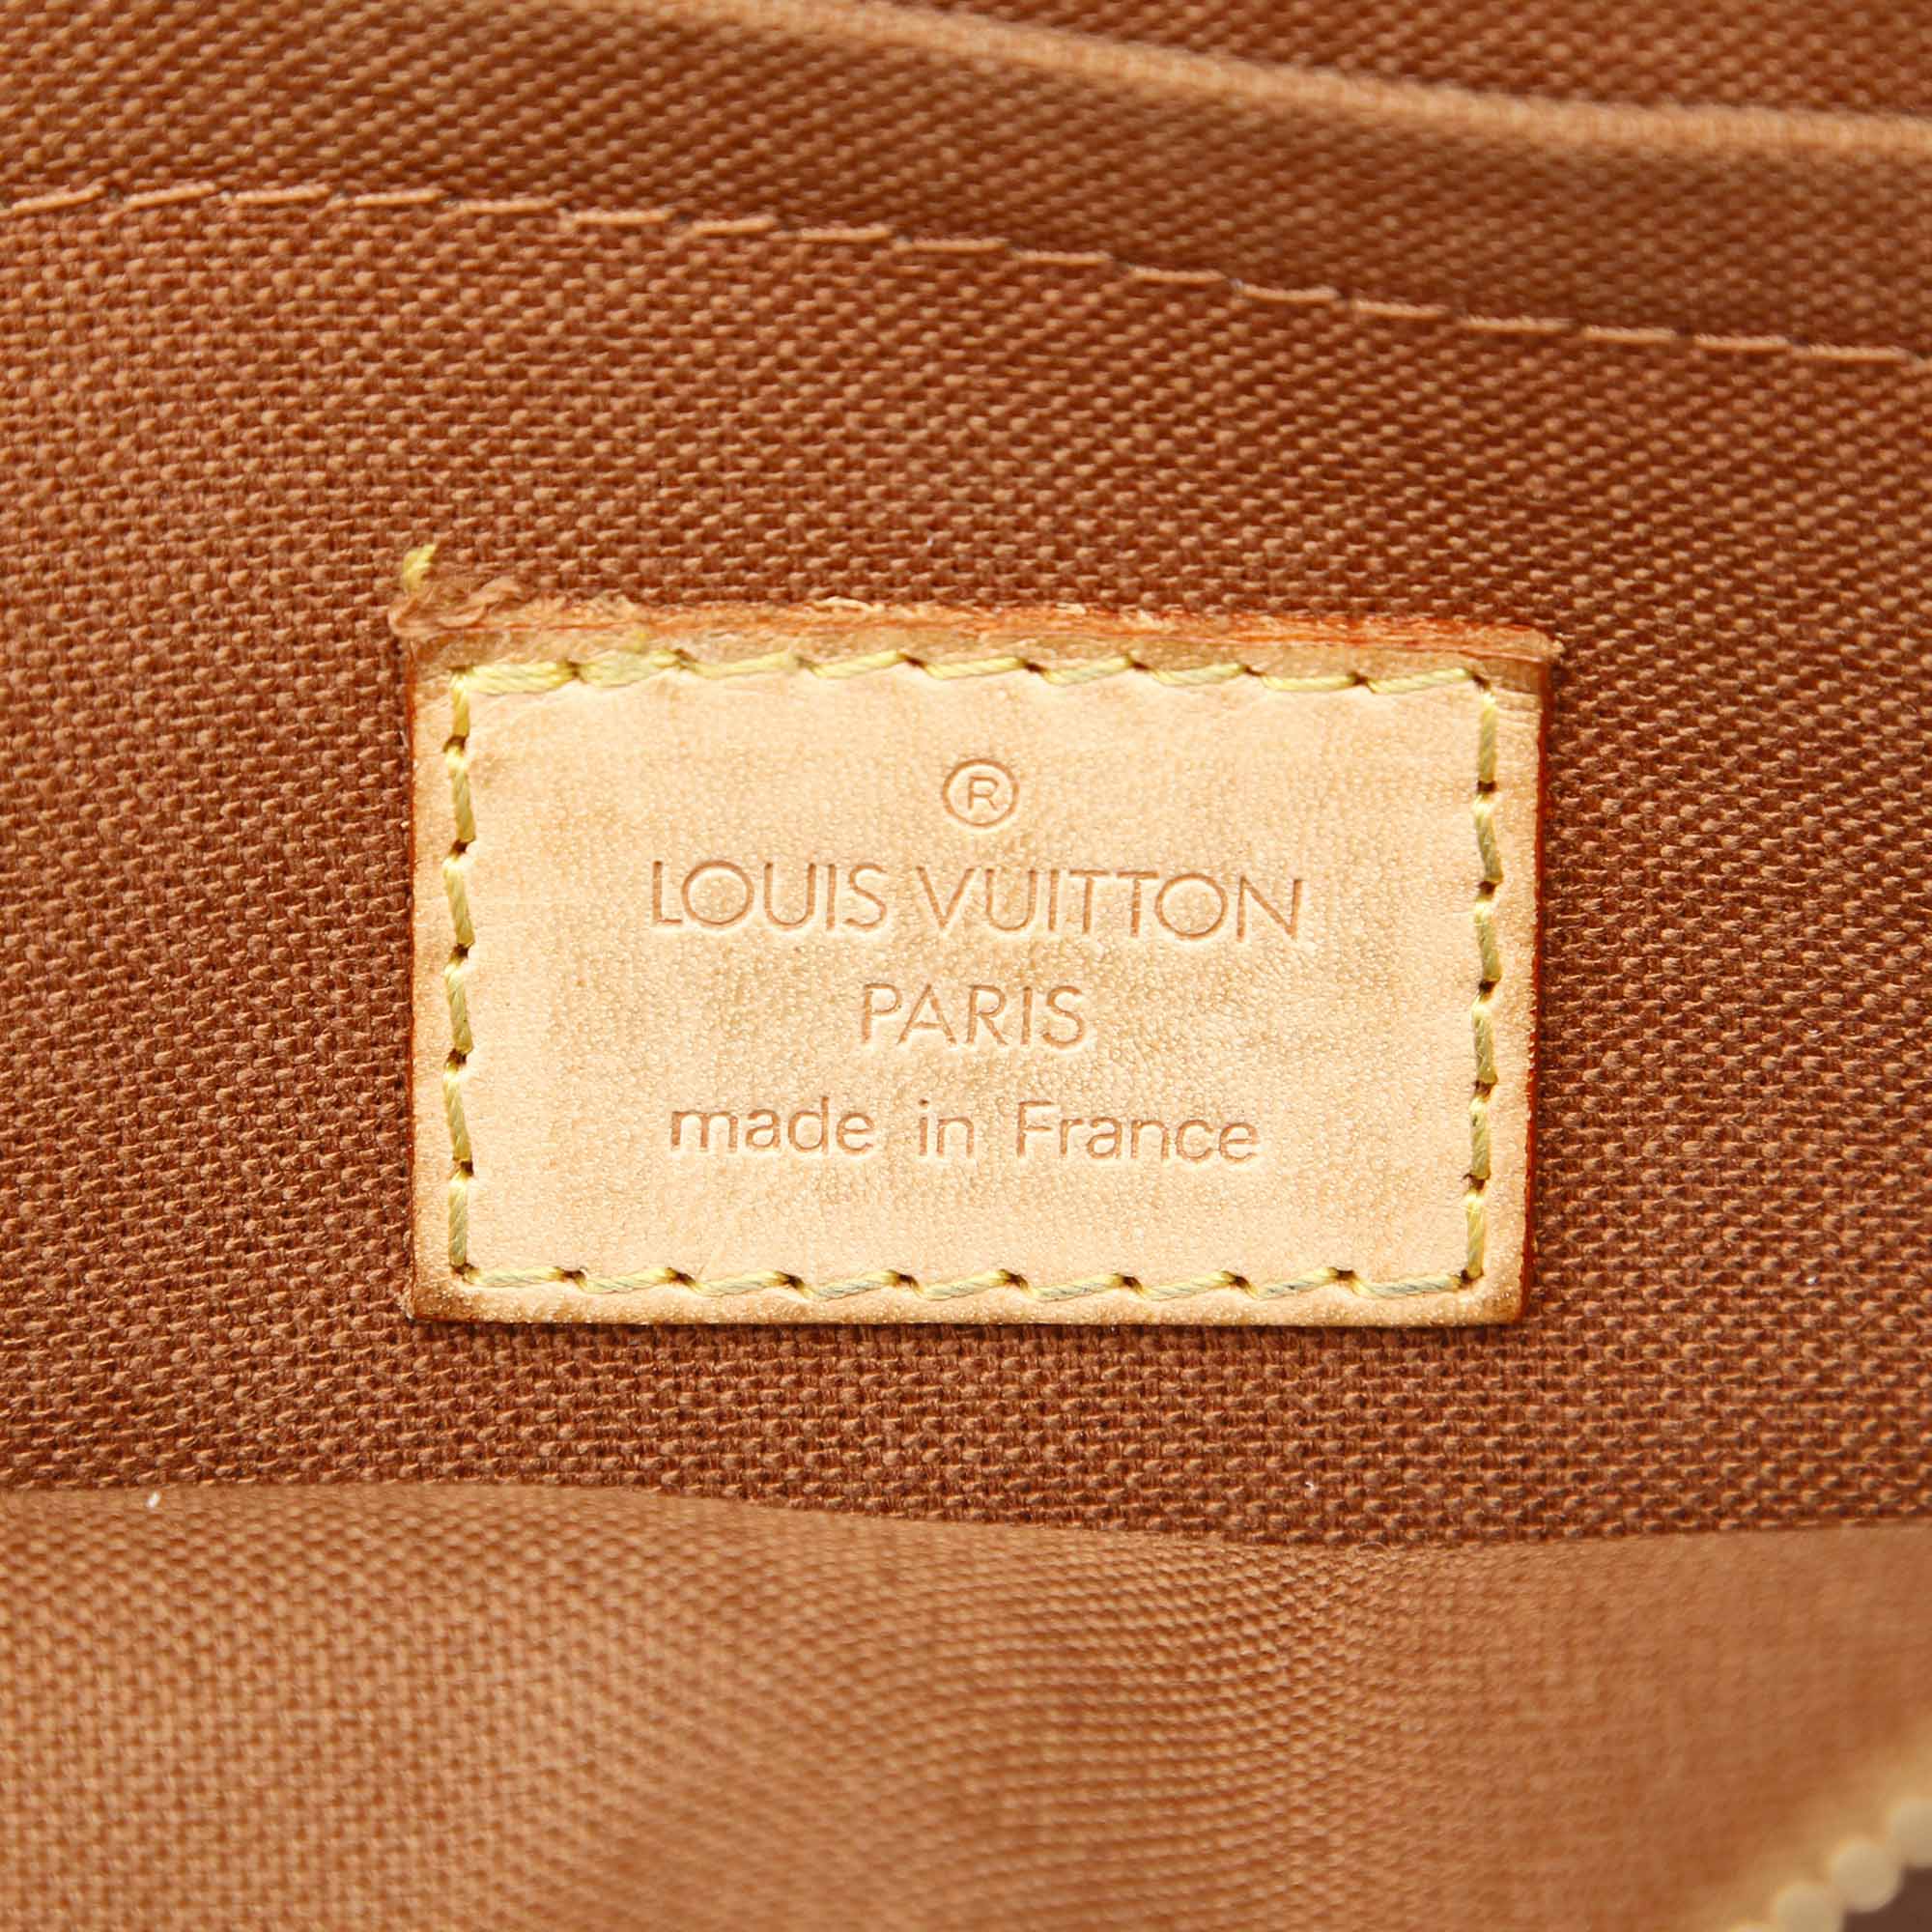 Brown Louis Vuitton Monogram Bosphore Belt Bag